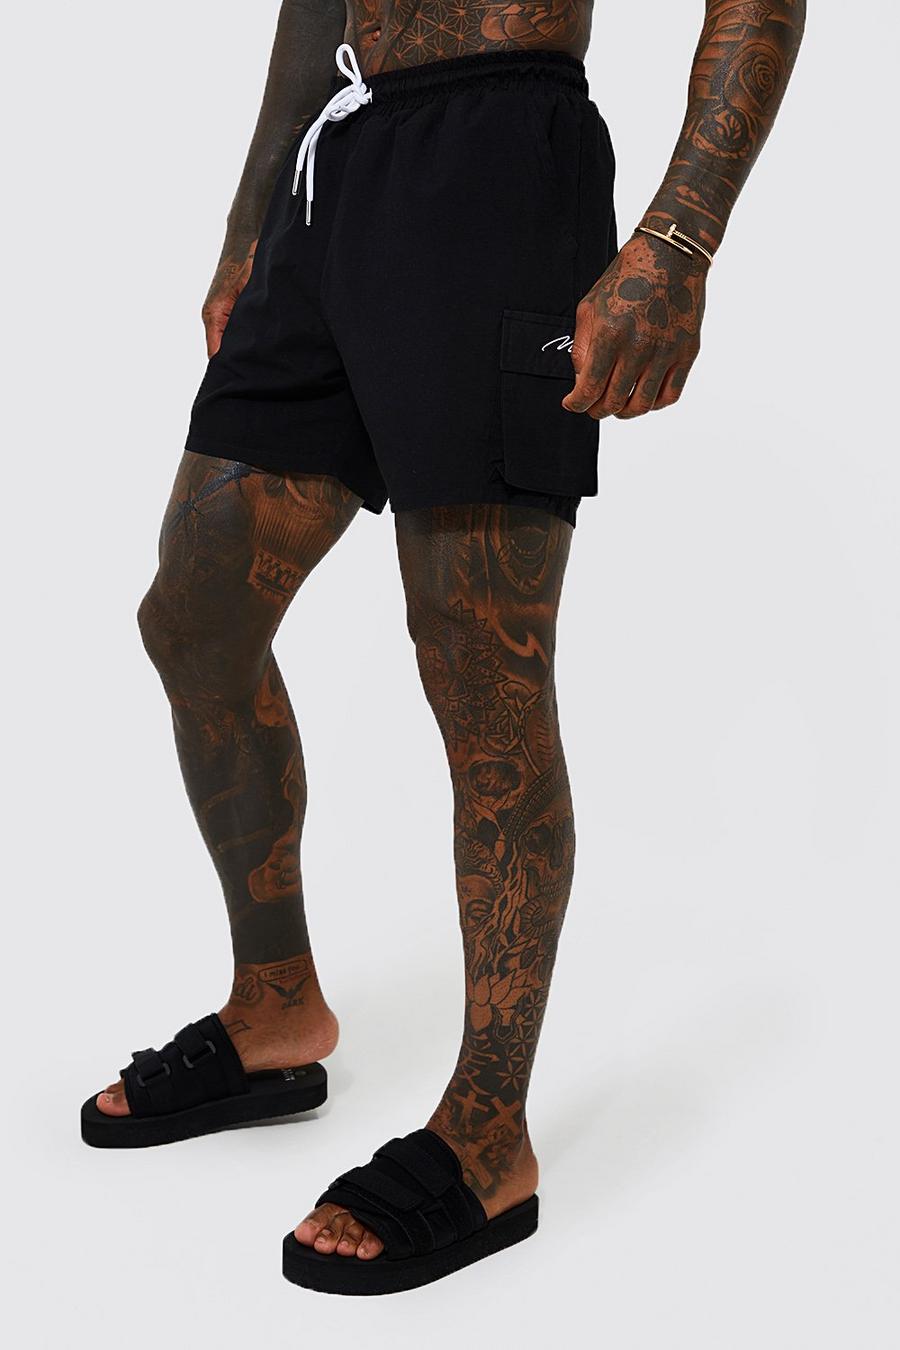 Black nero שורט בגד ים בסגנון דגמ'ח מבד ממוחזר עם חתימת Man